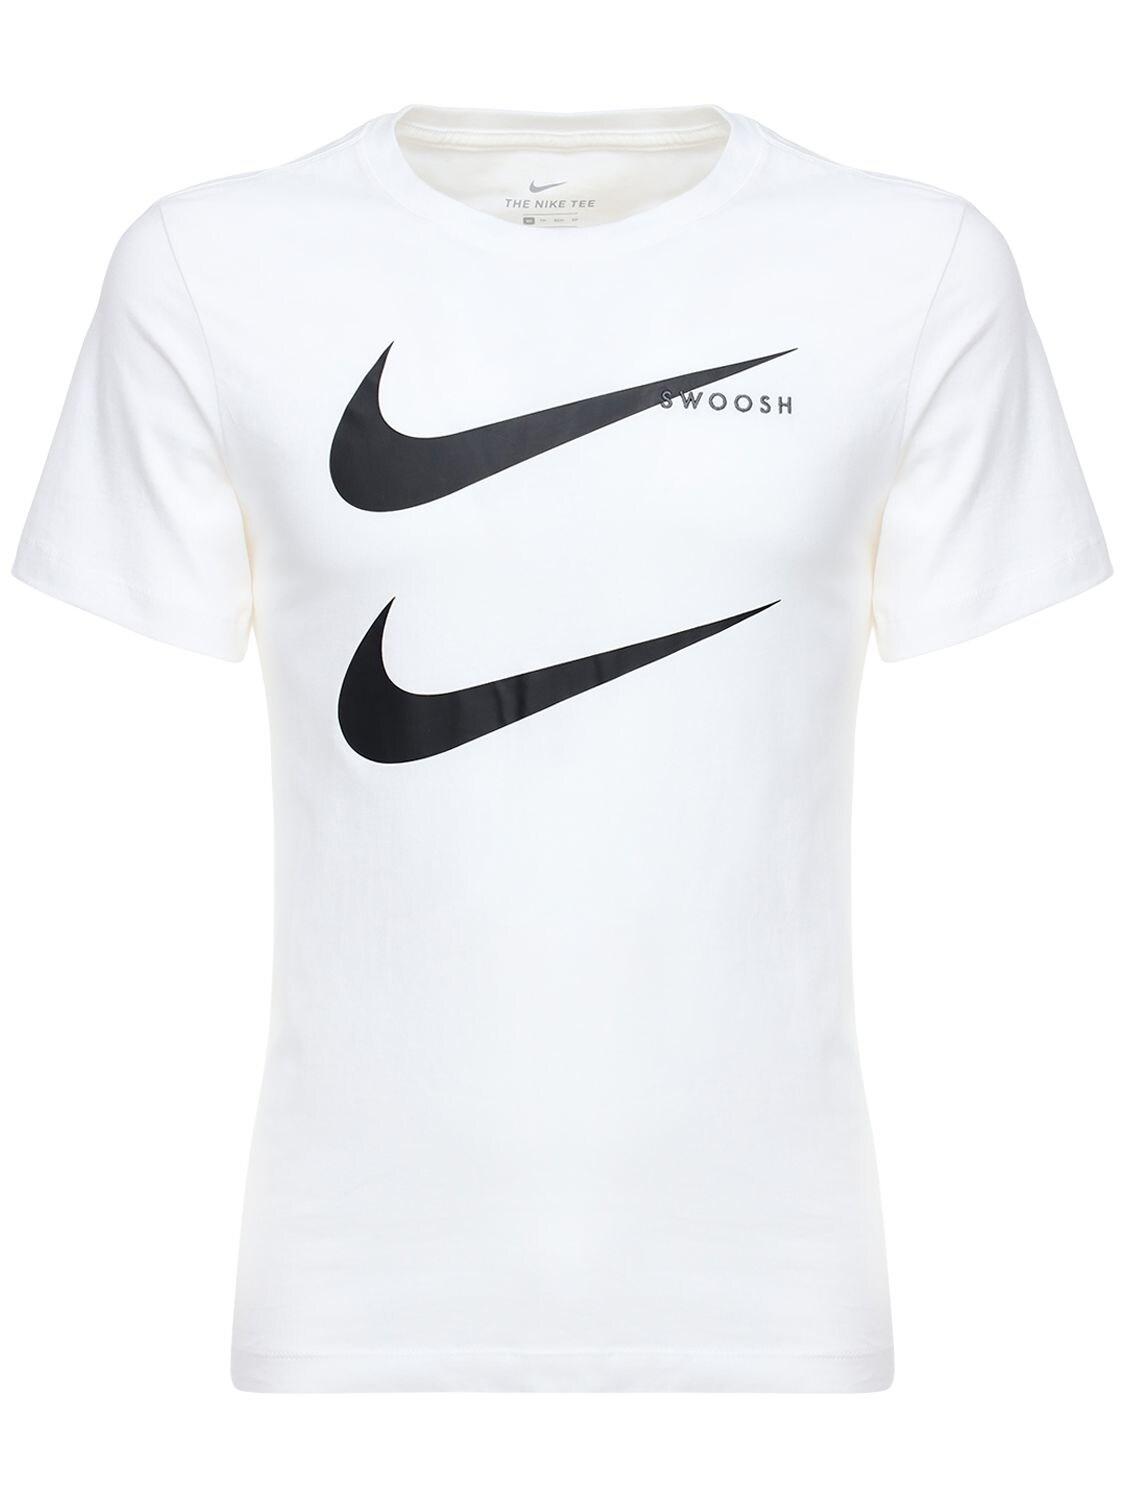 Nike Double Swoosh Cotton T-shirt in White for Men | Lyst Australia